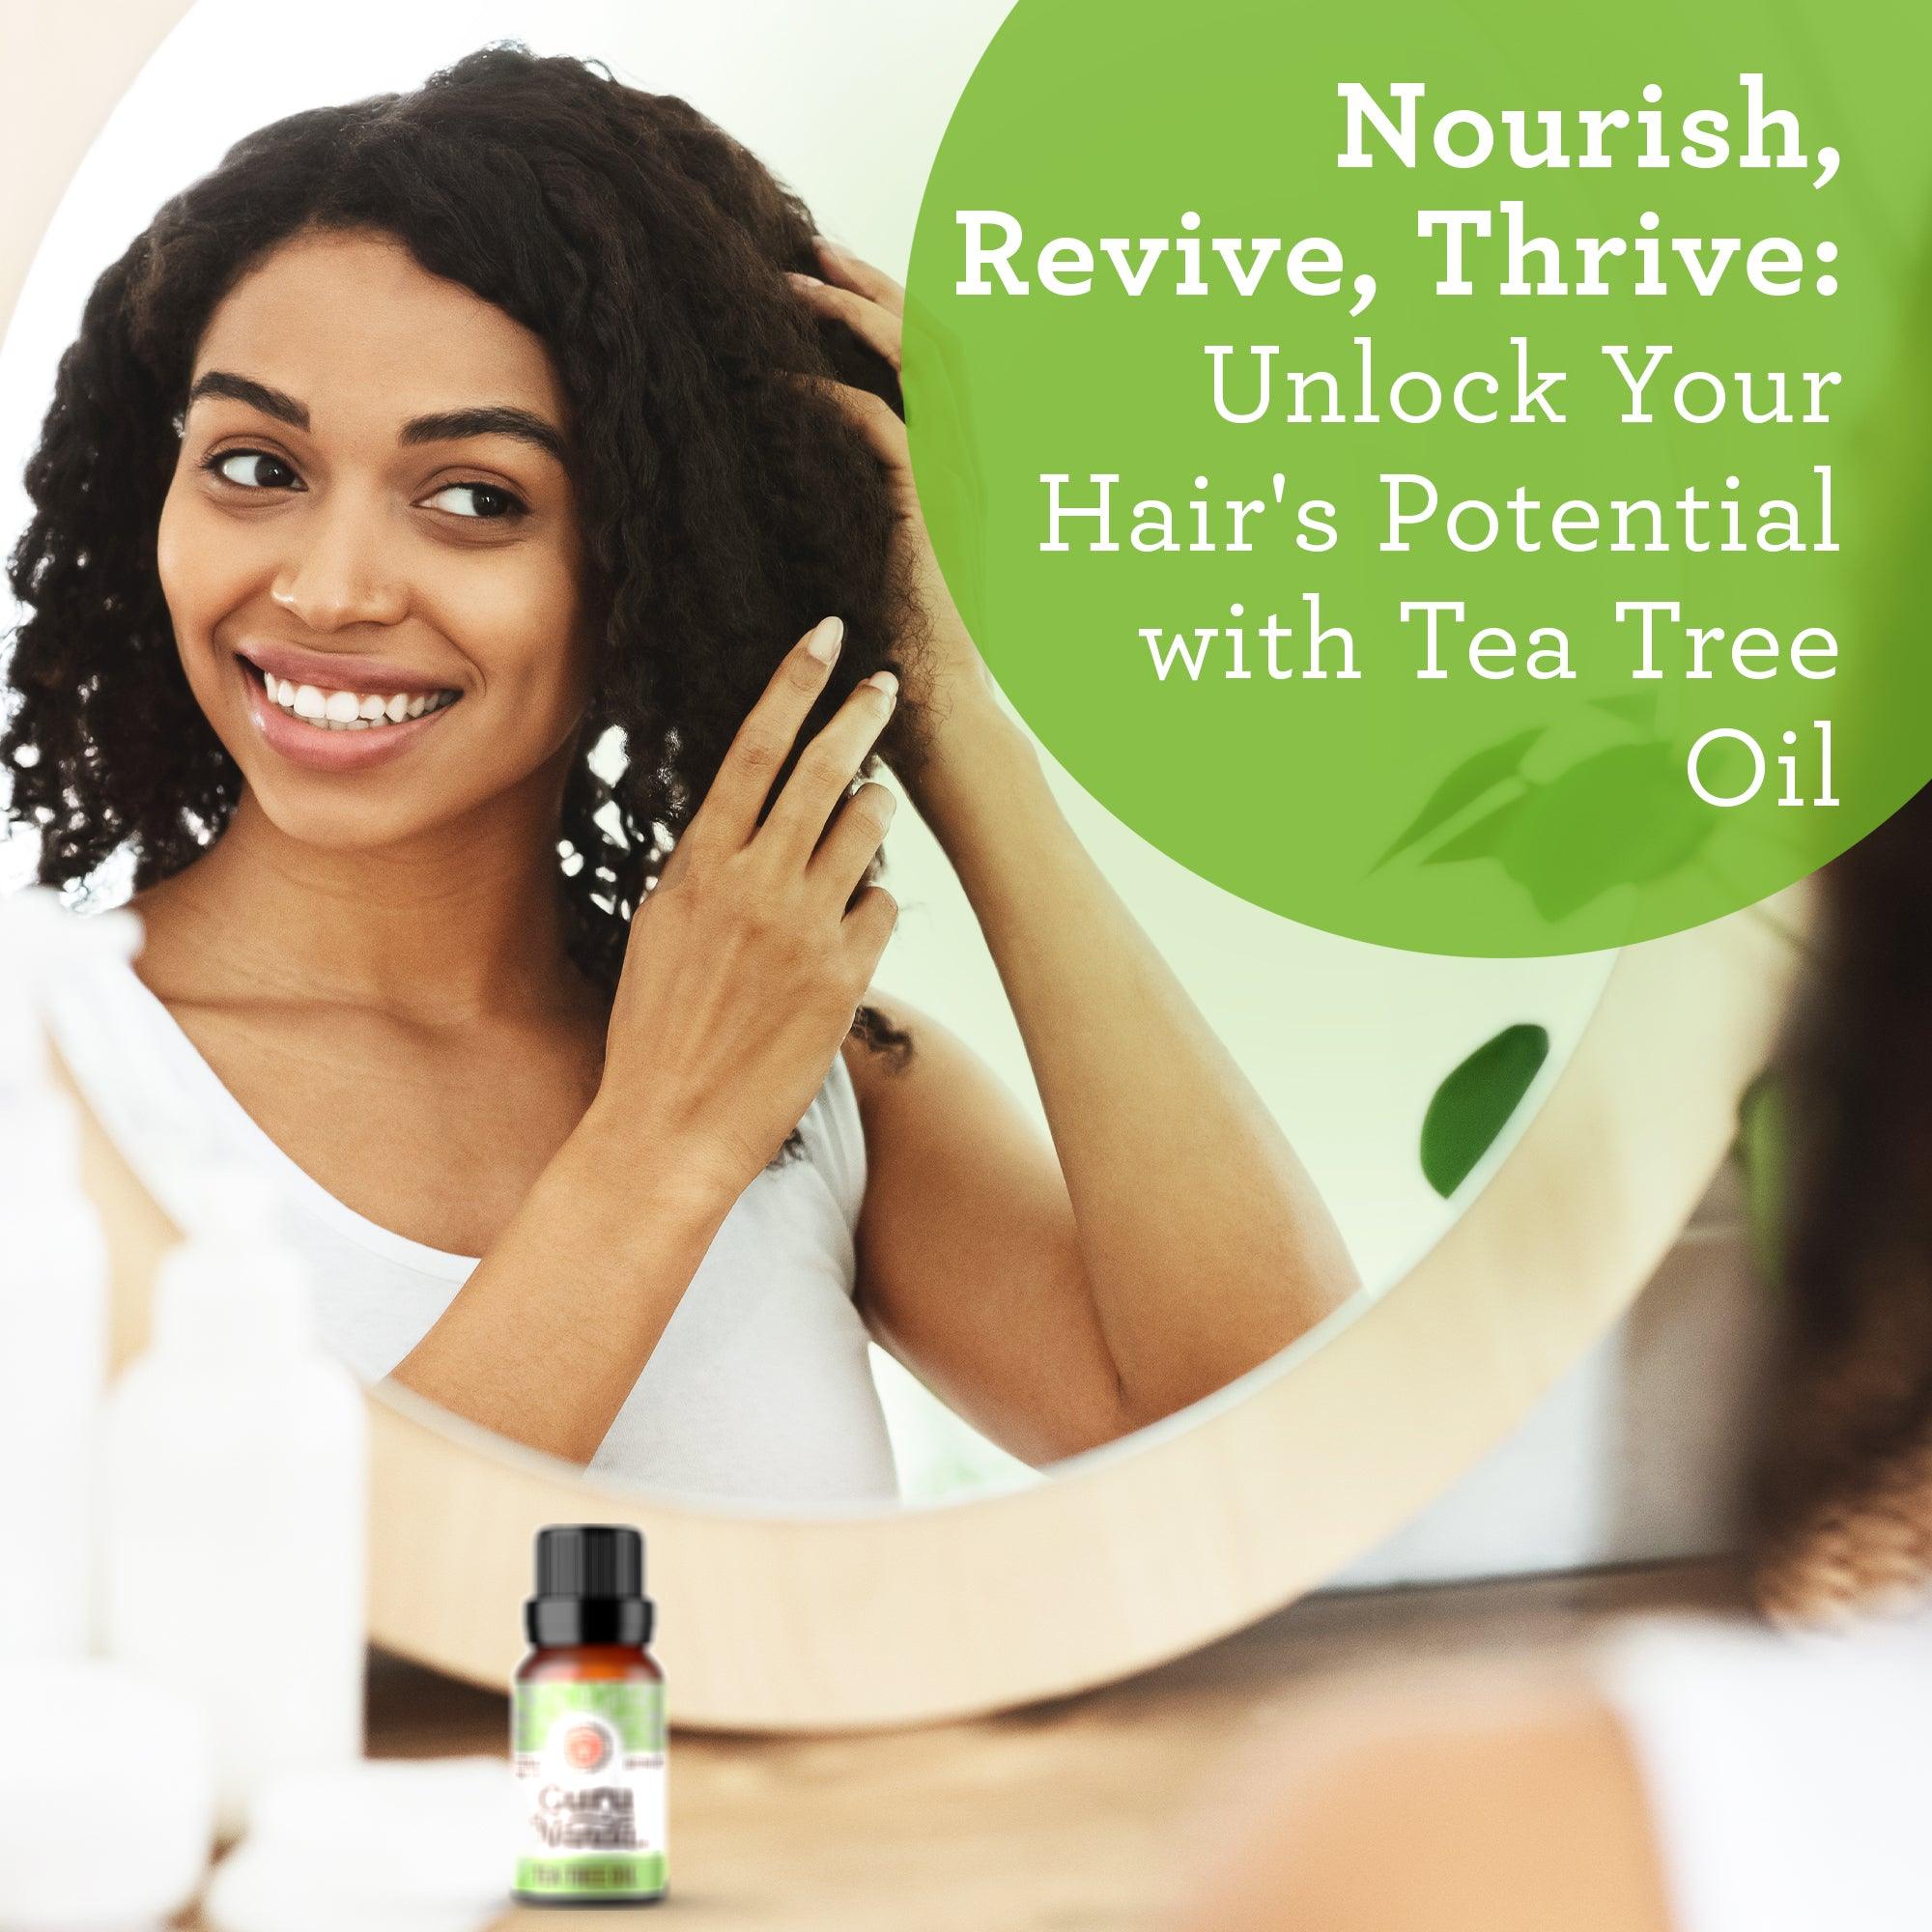 Tea Tree Essential Oil (2-Pack) - GuruNanda